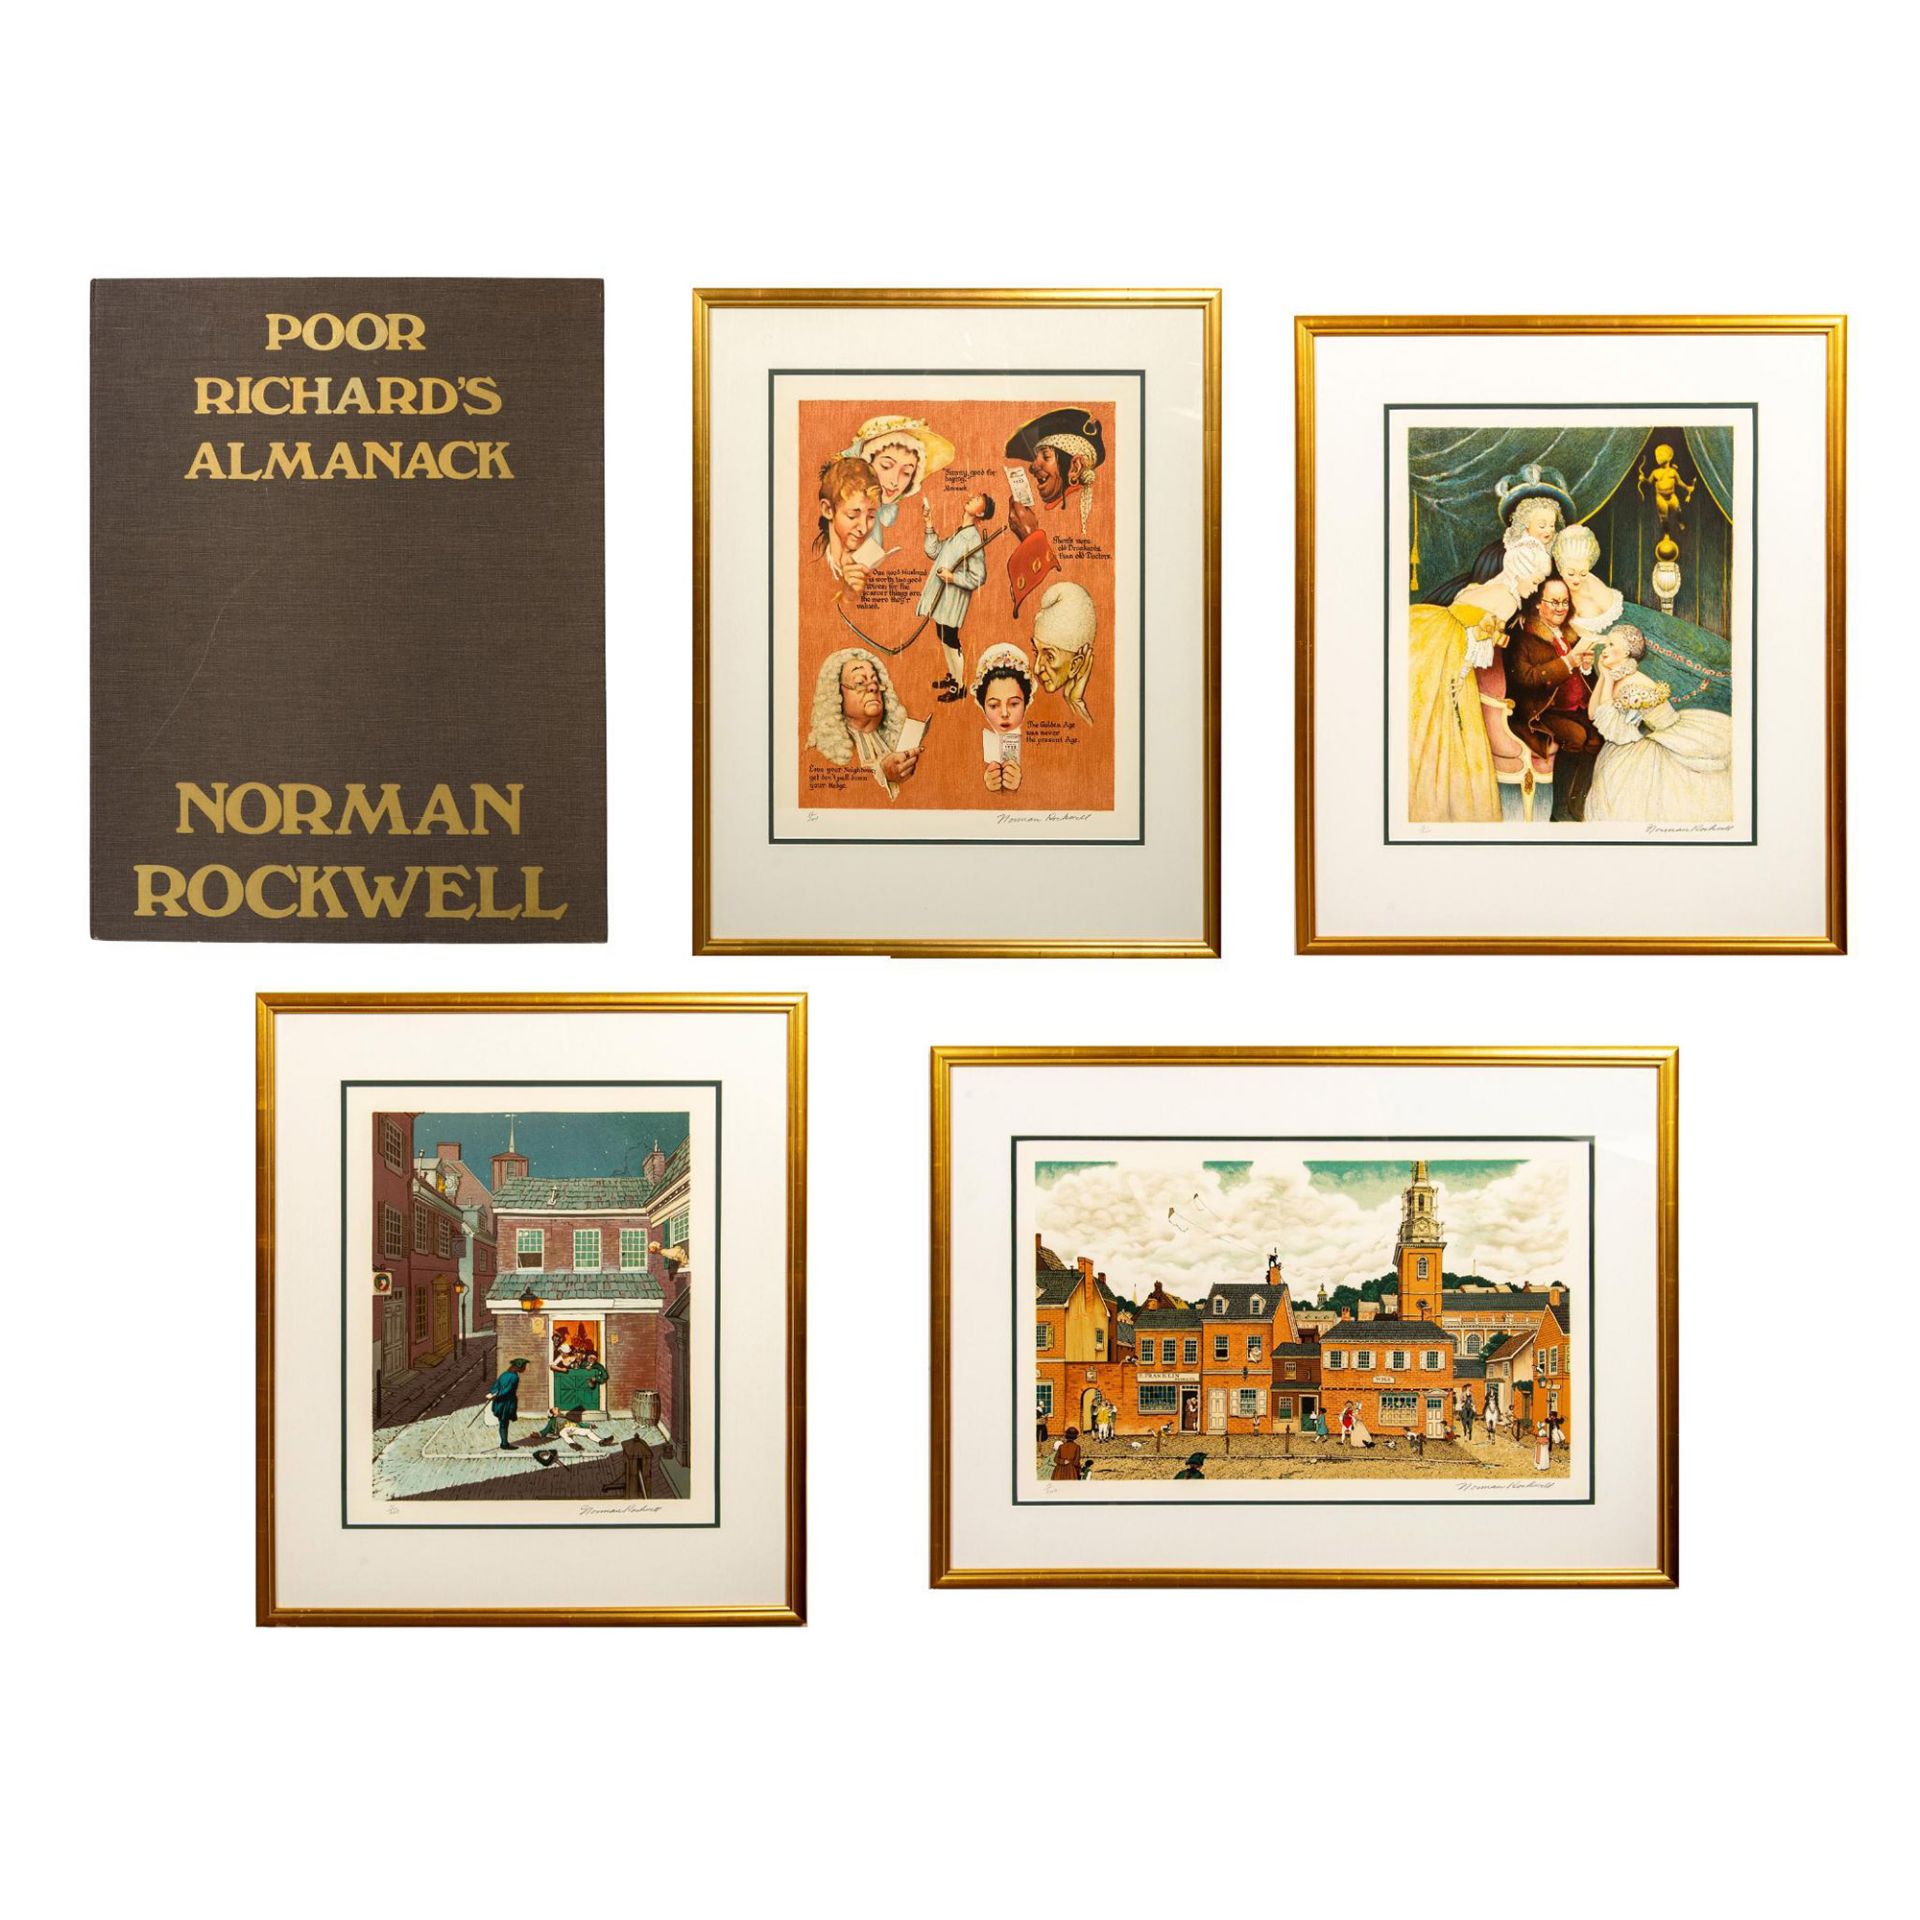 Norman Rockwell, Poor Richard's Almanack, Signed Suite